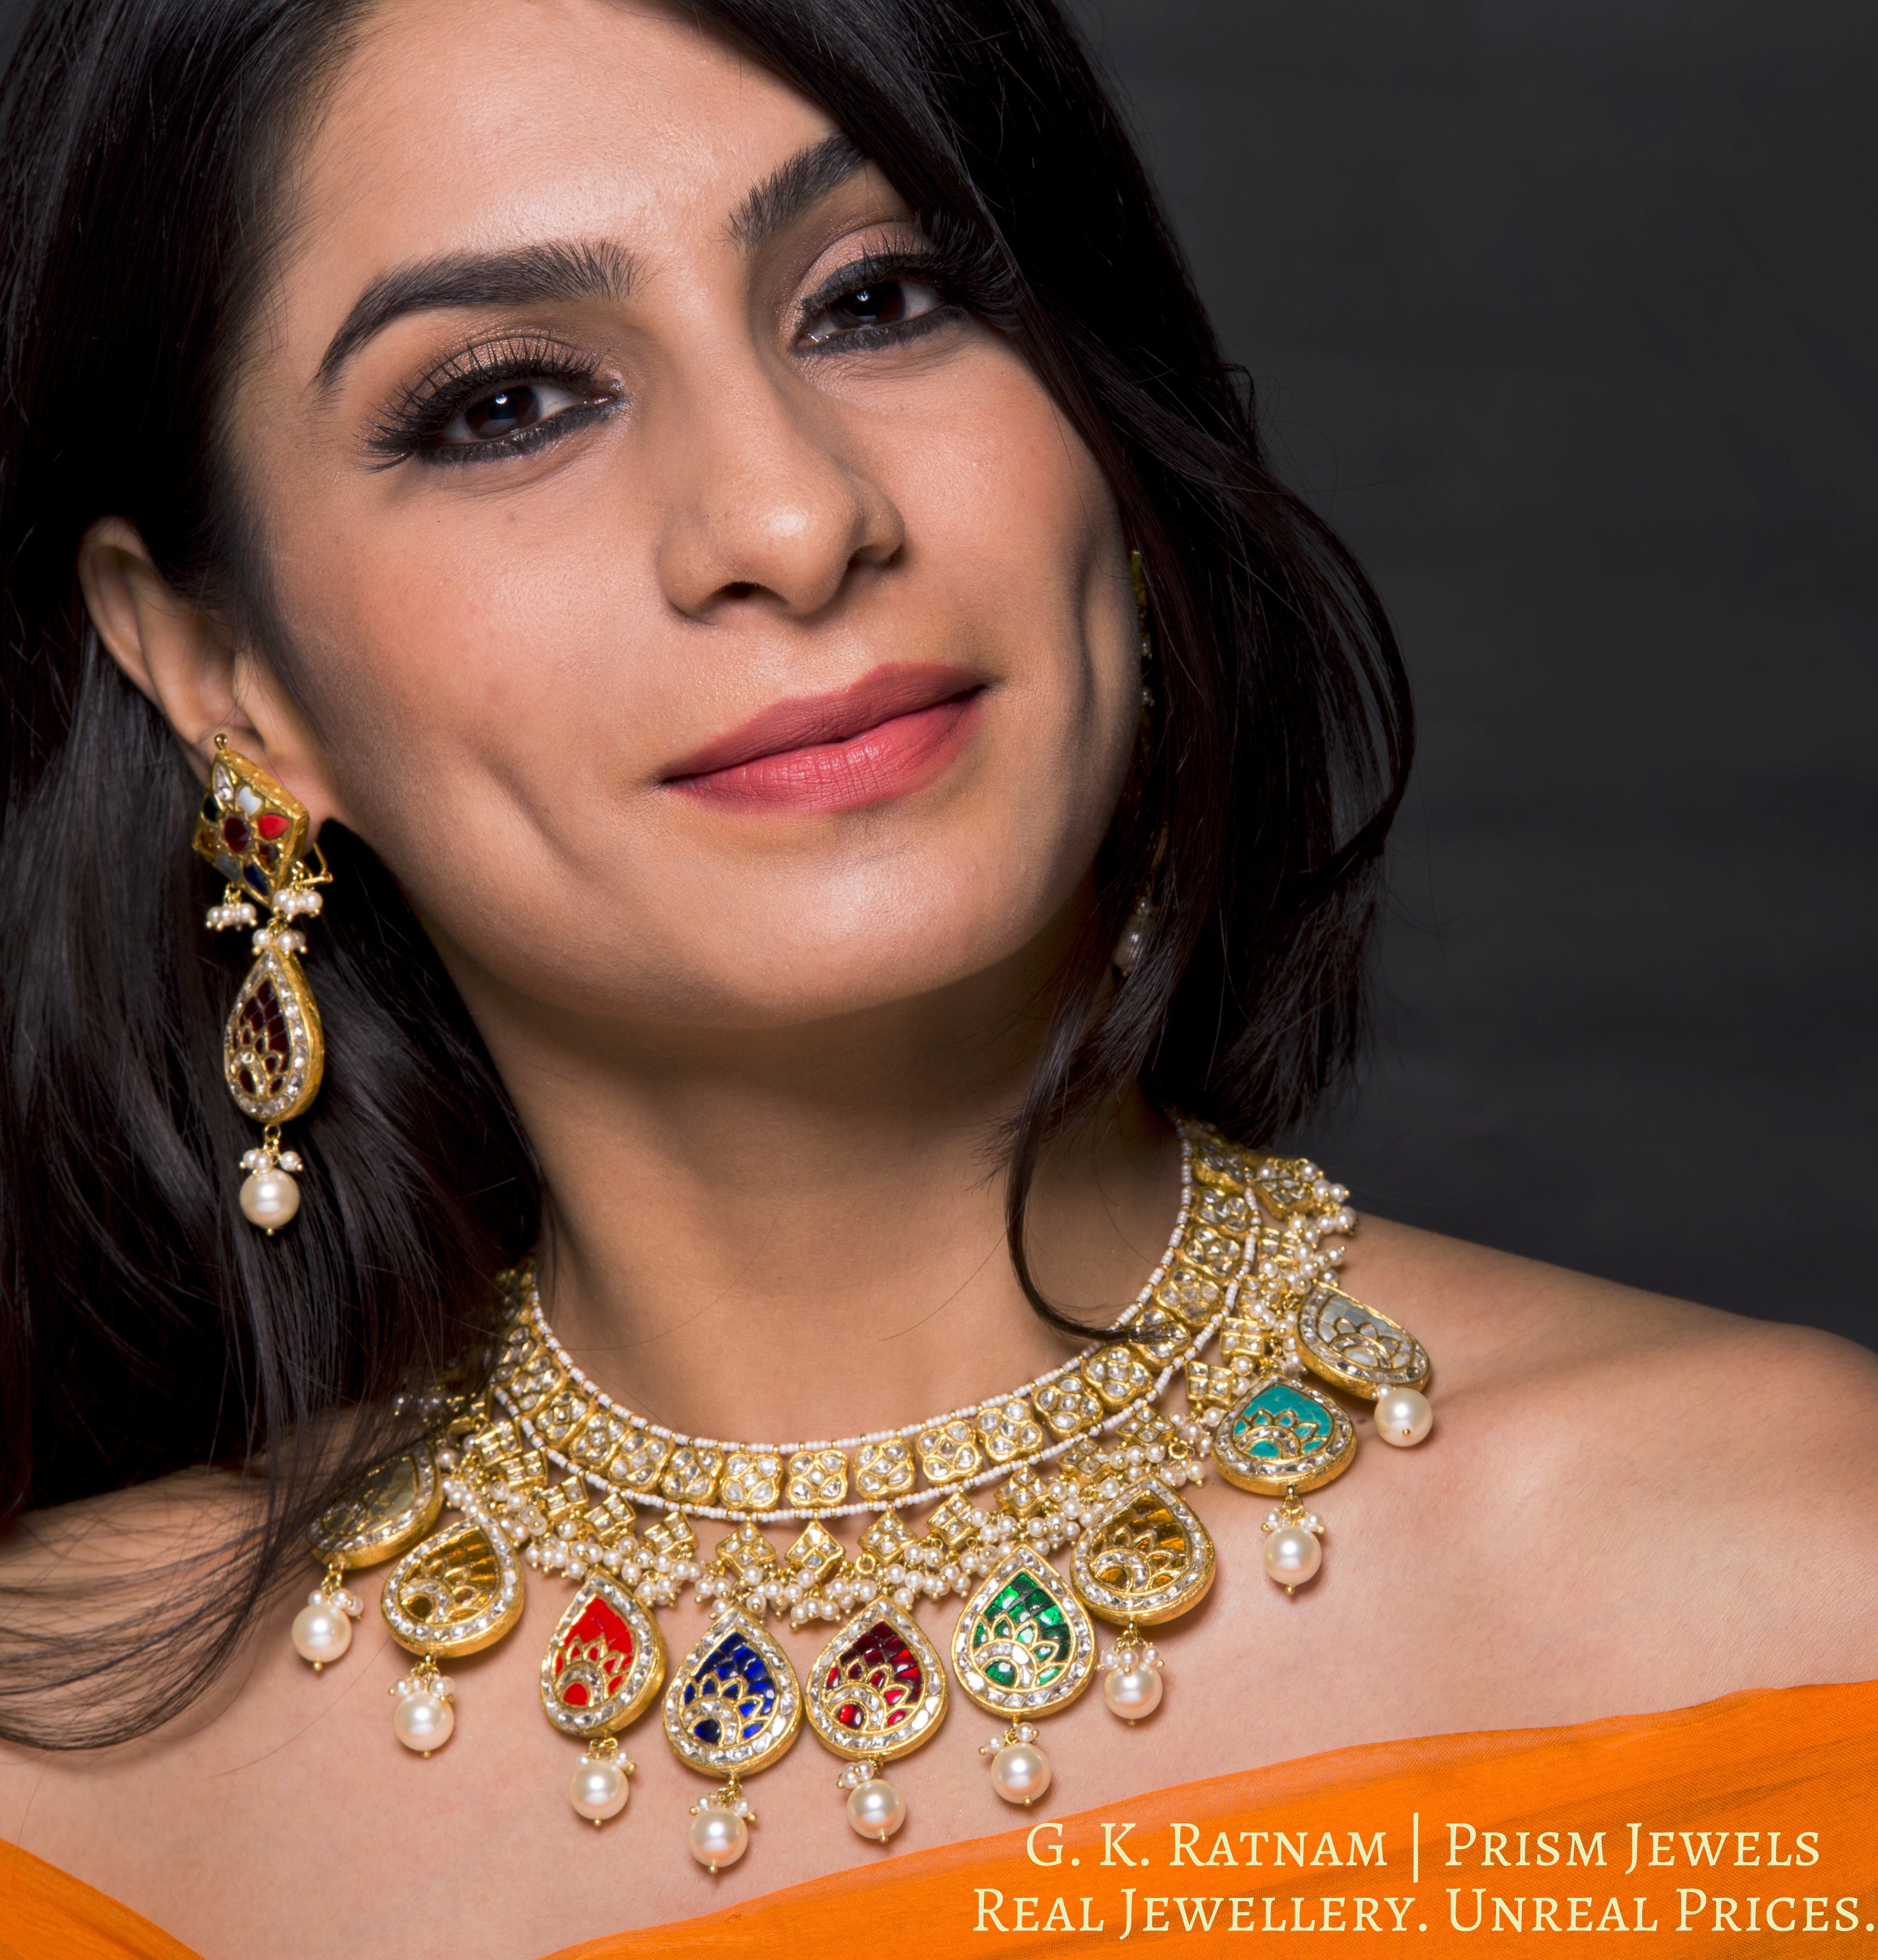 23k Gold and Diamond Polki Necklace Set with pear-shaped Navratna Hangings - G. K. Ratnam